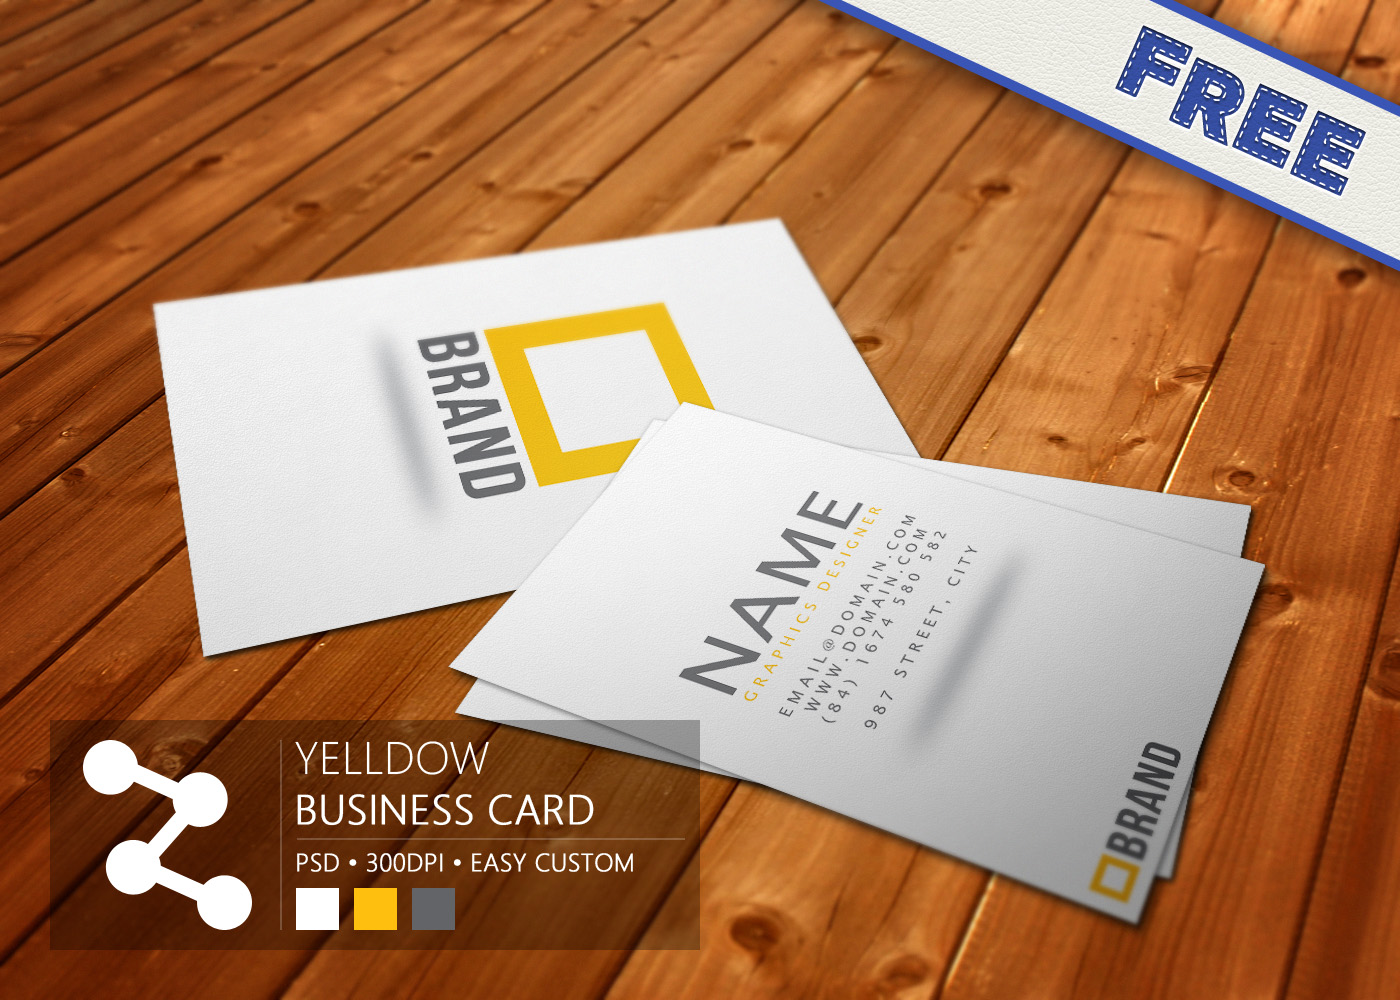 Yelldow Business Card - Free